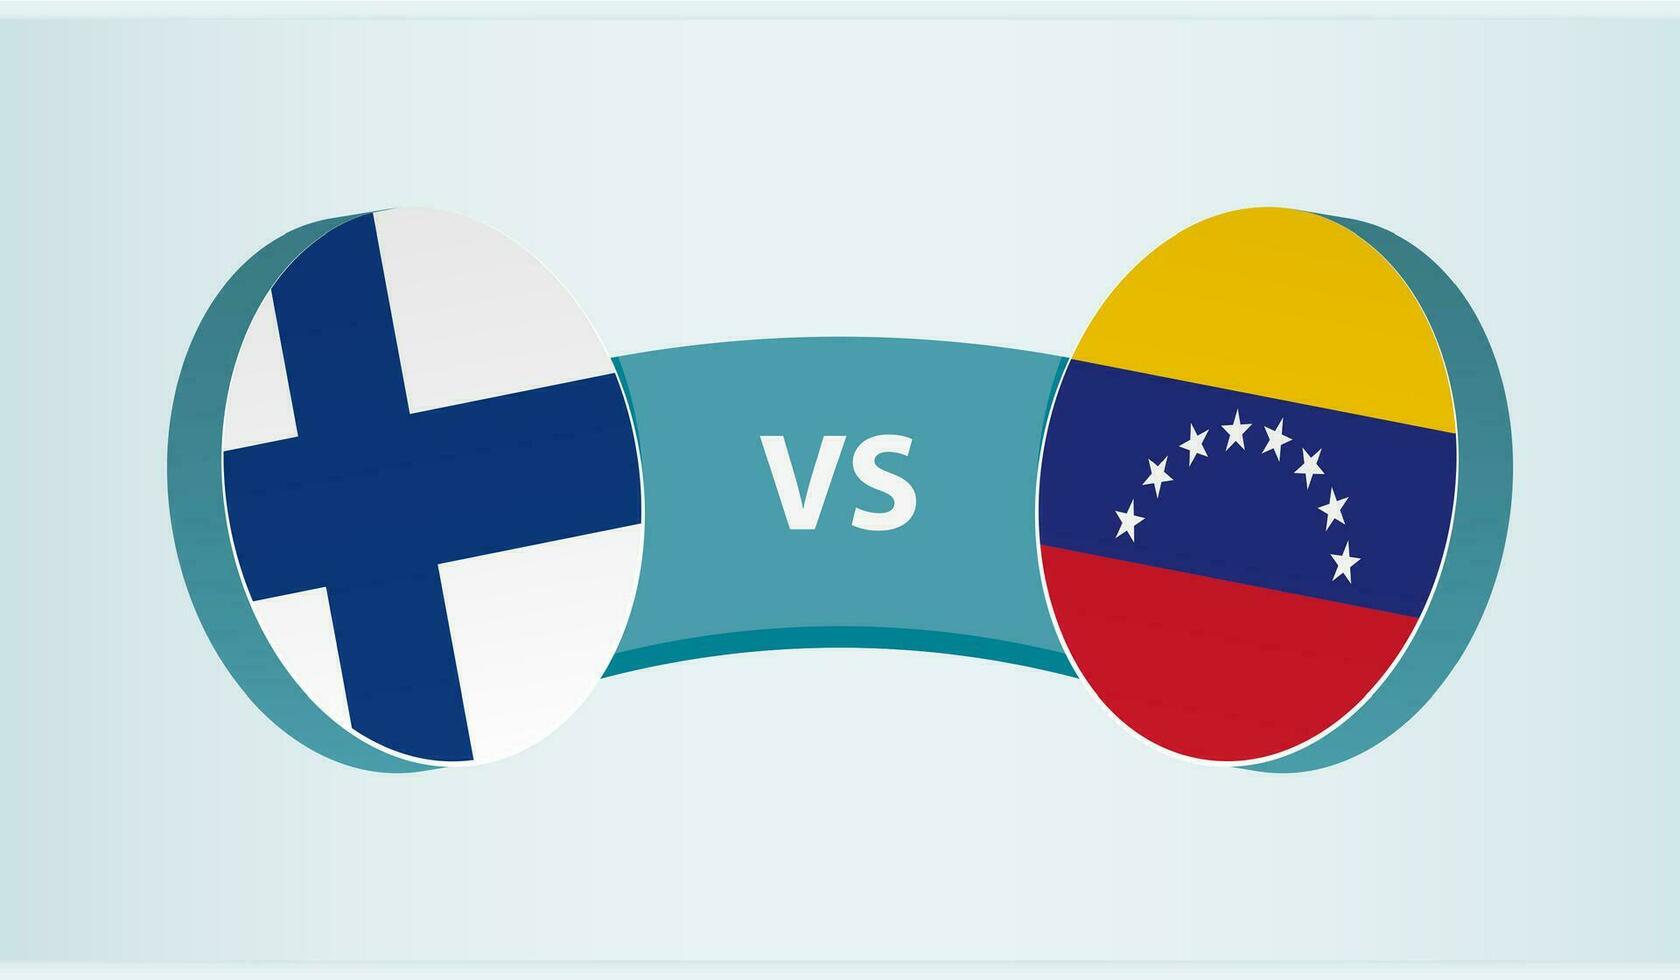 finland mot venezuela, team sporter konkurrens begrepp. vektor